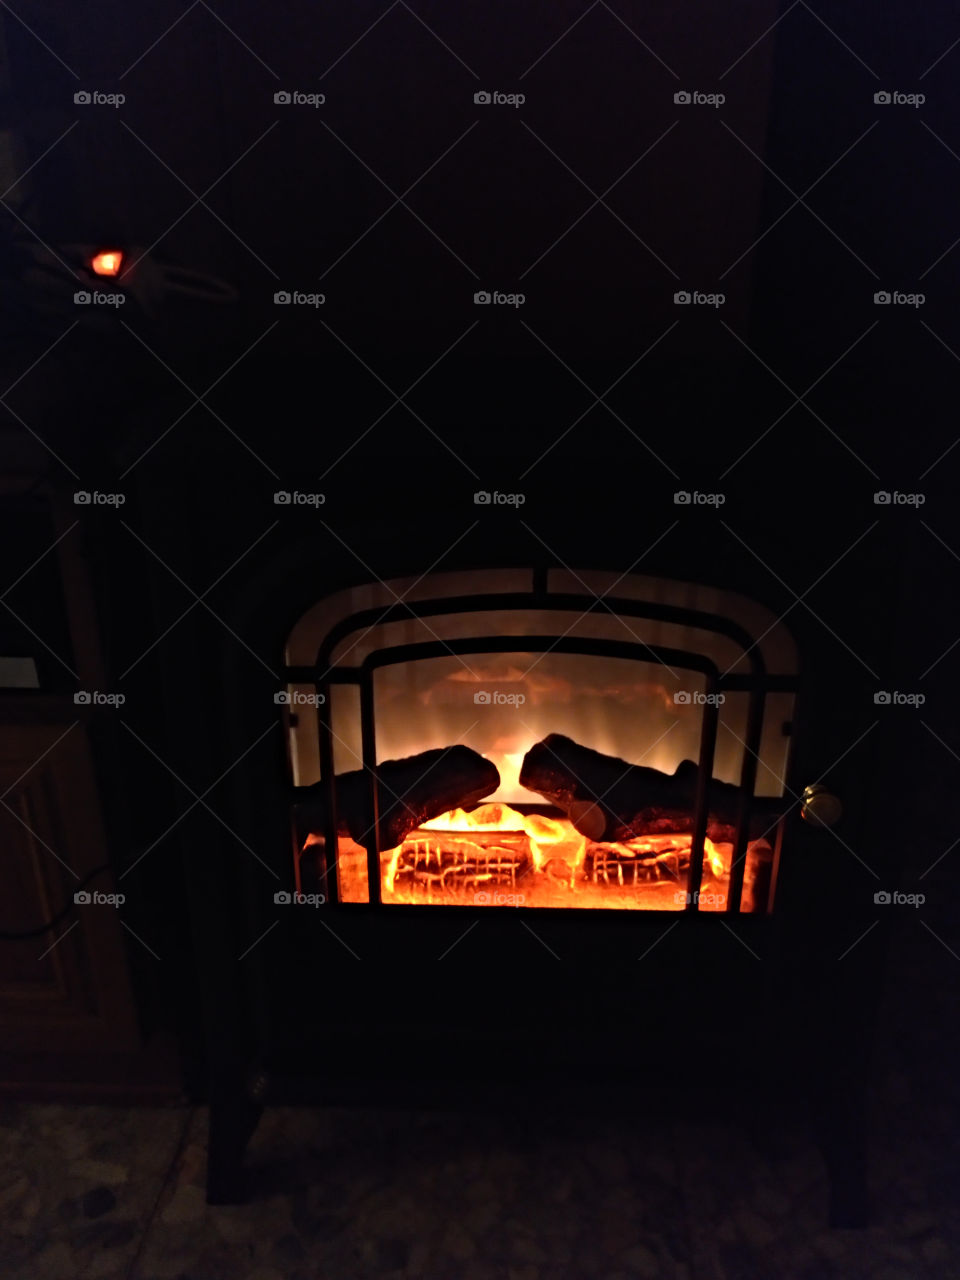 chimenea foto de una chimenea encendida. hace frío